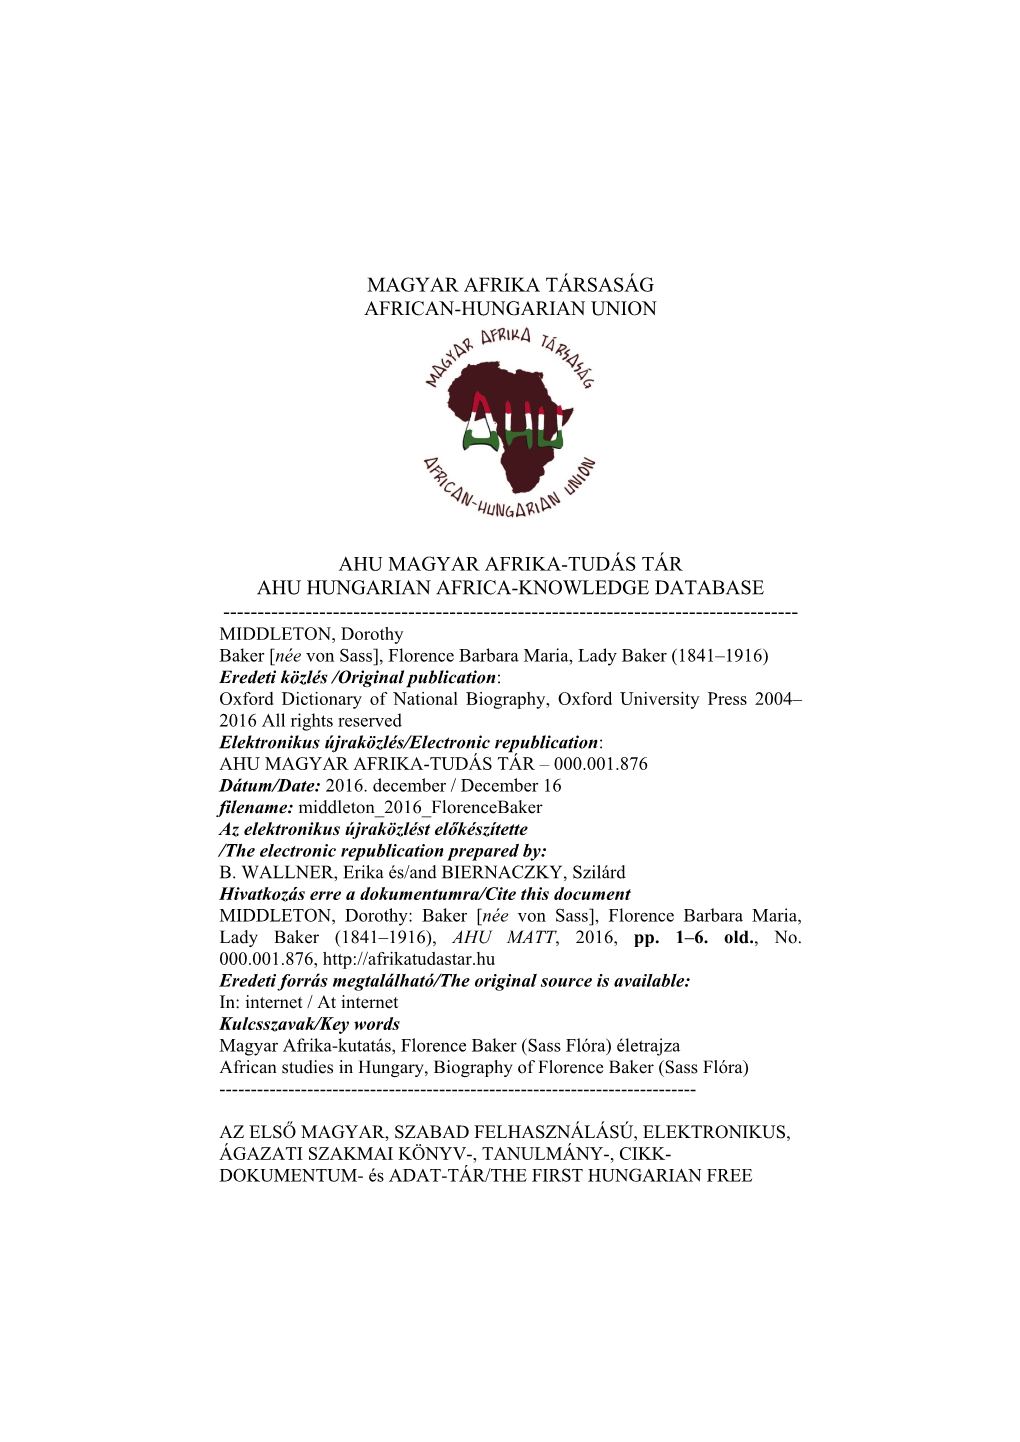 Magyar Afrika Társaság African-Hungarian Union